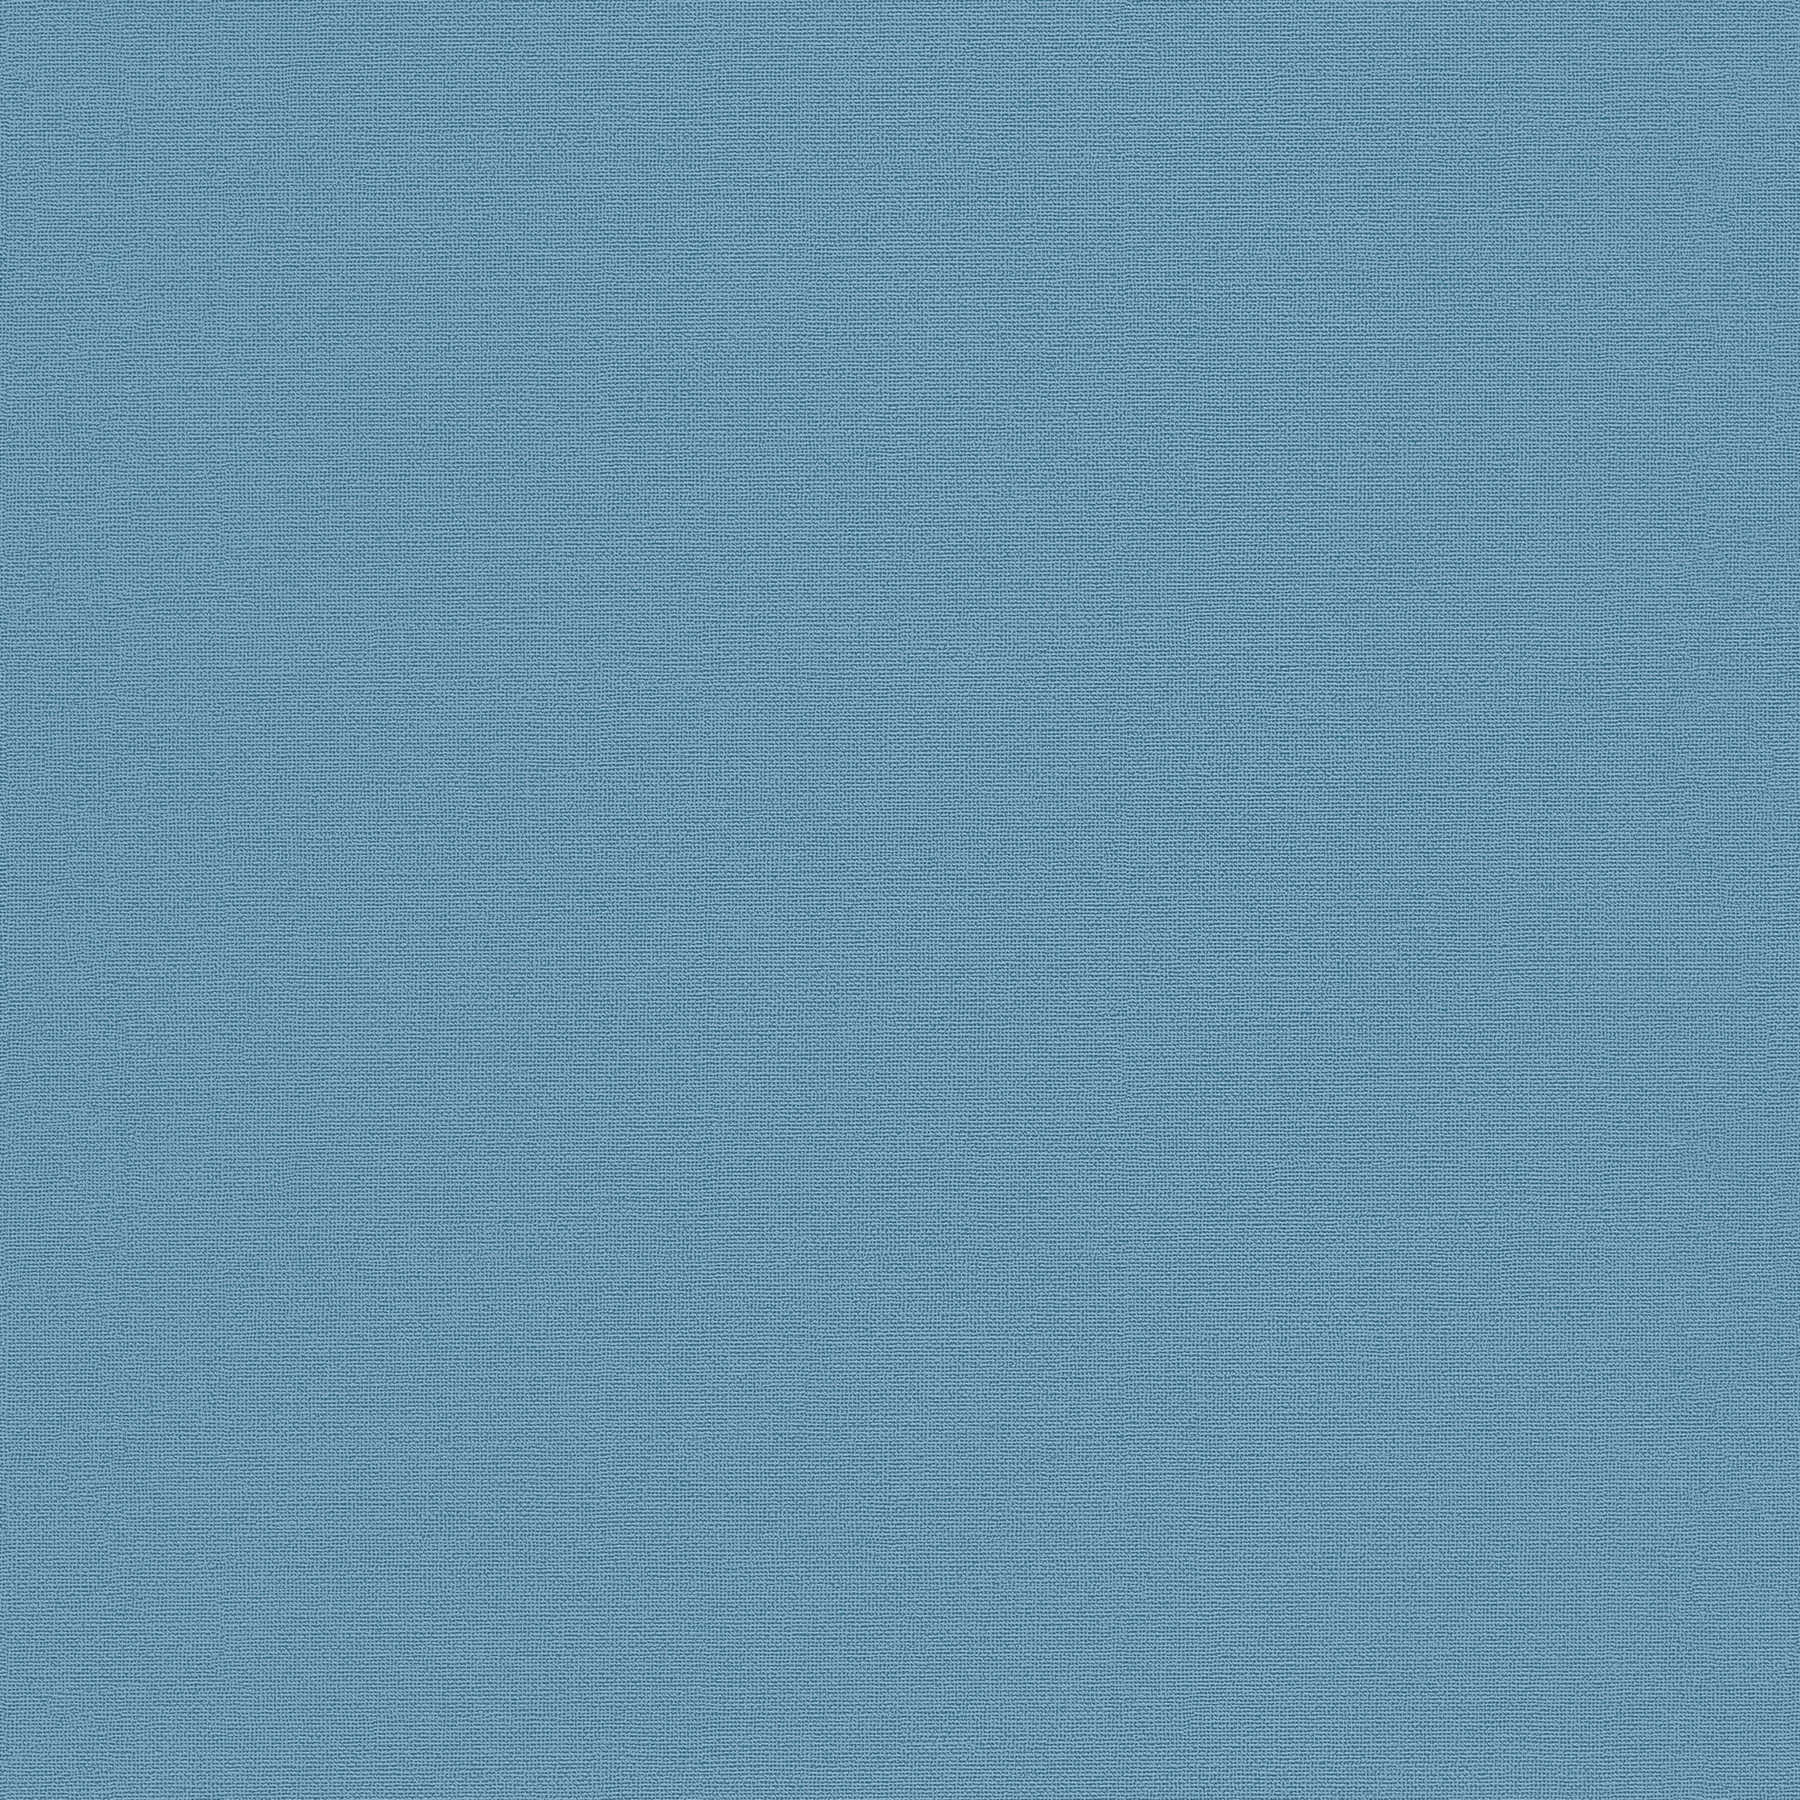 Leineoptik Tapete Brilliantblau unifarben Blau im Scandi Style
